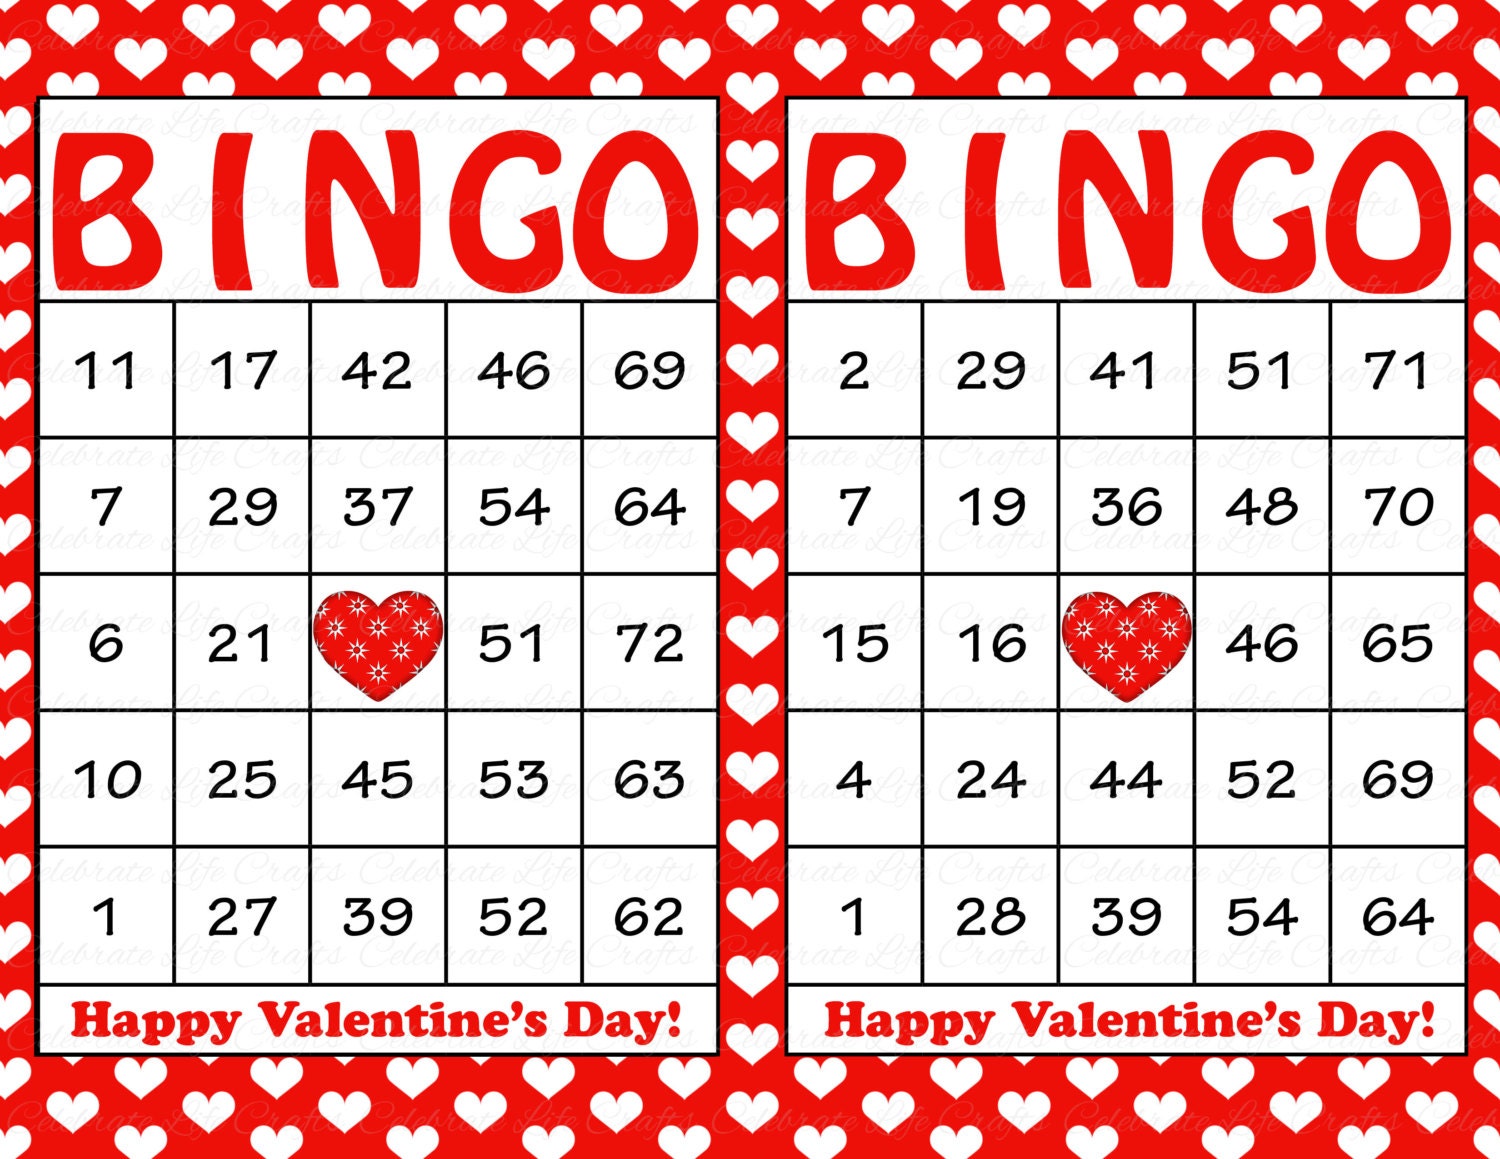 free-valentine-bingo-game-printable-collection-for-kids